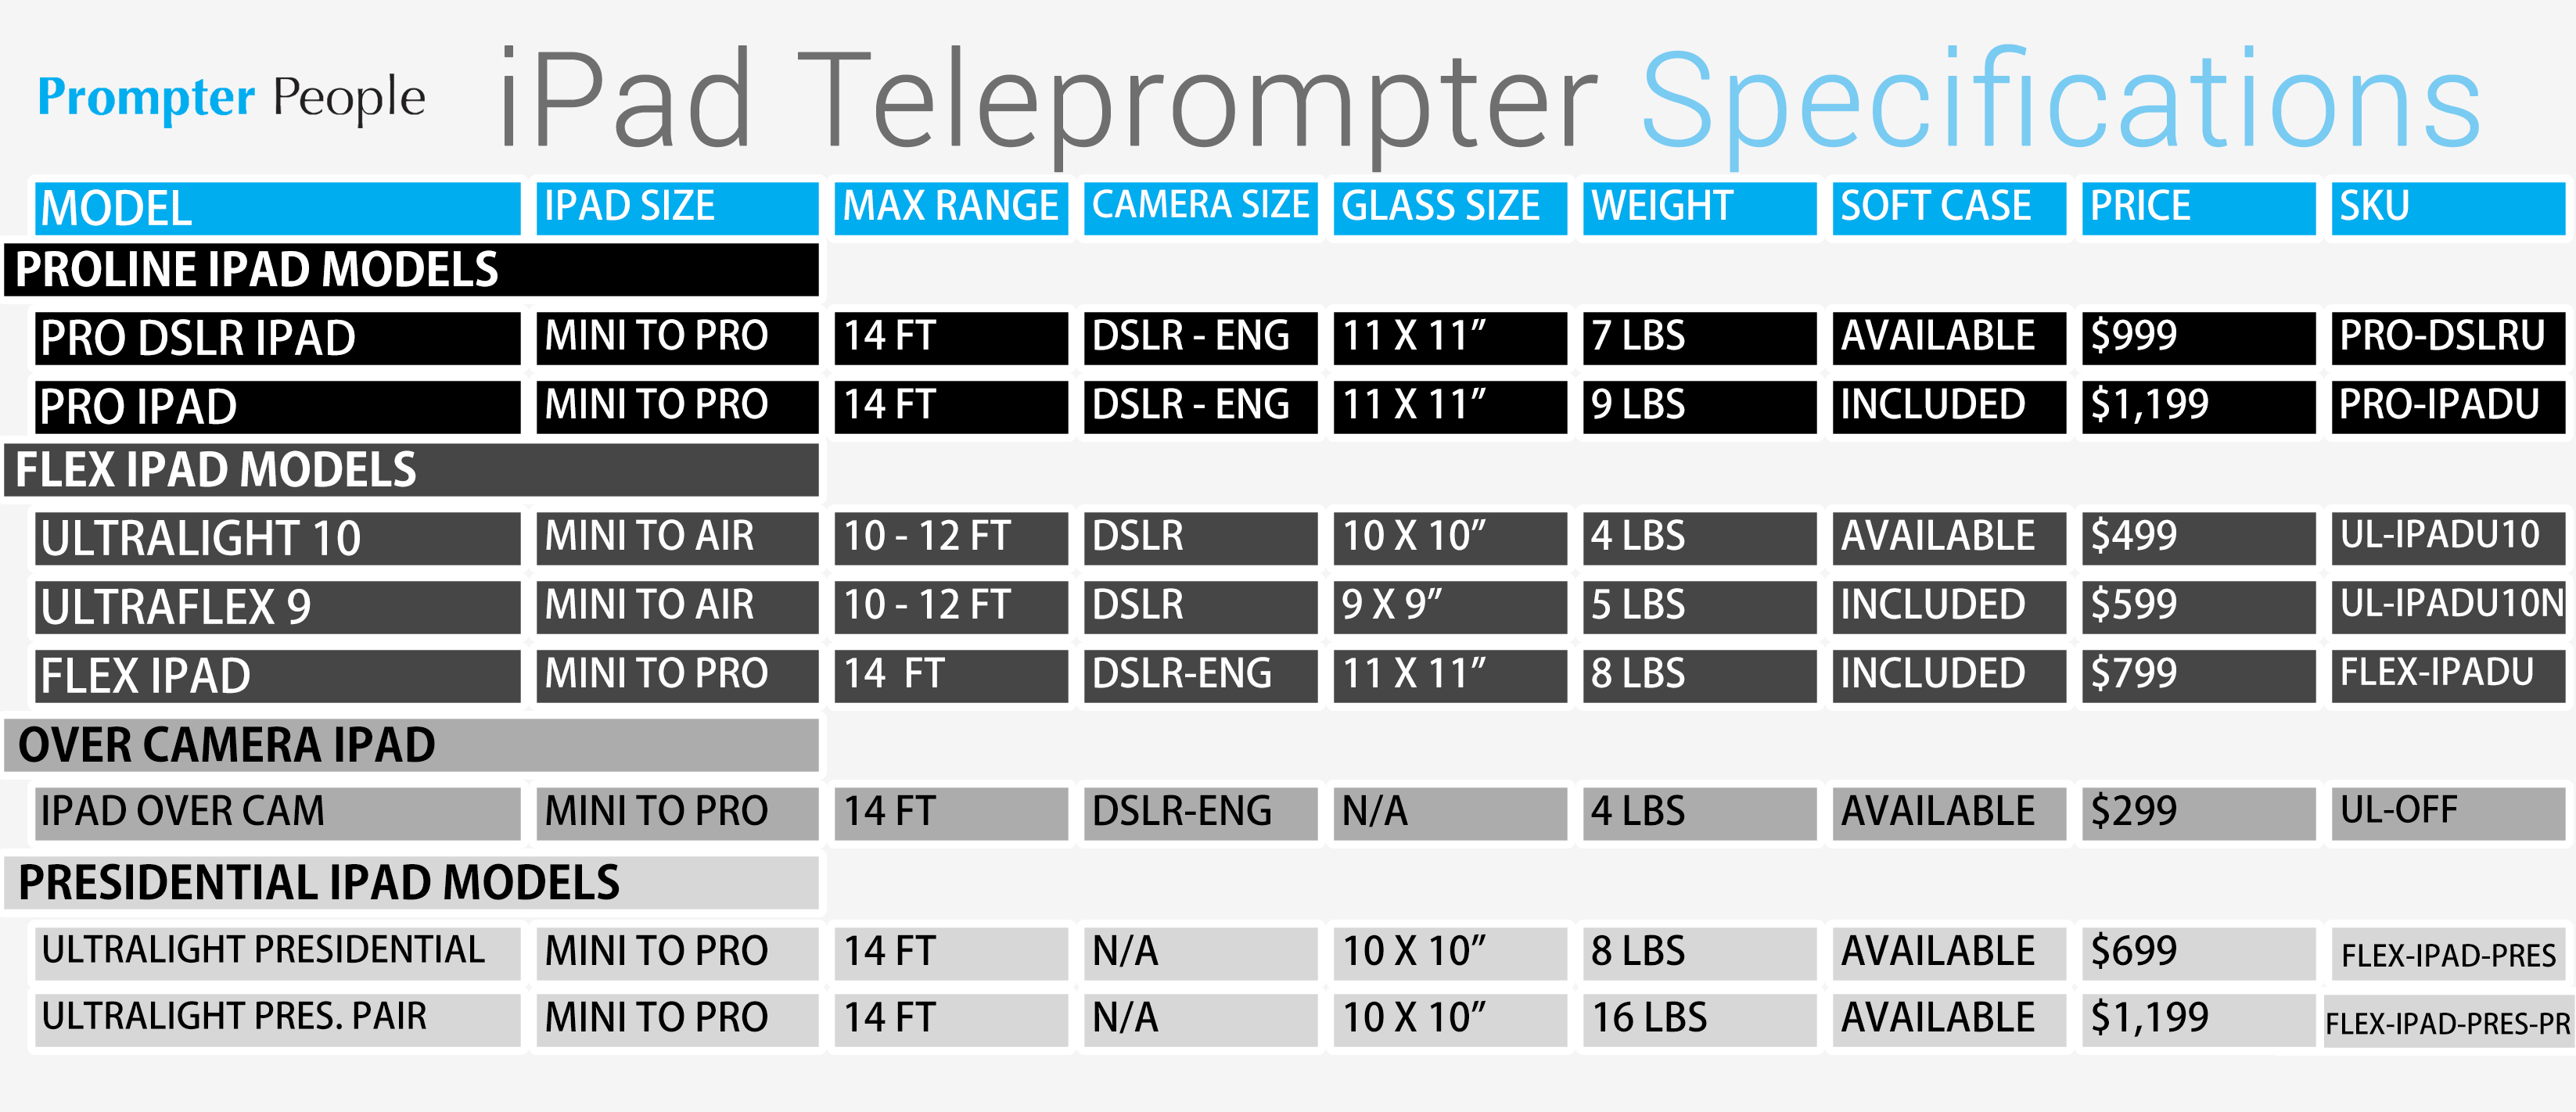 ipad-teleprompter-specifications-pp-b.jpg